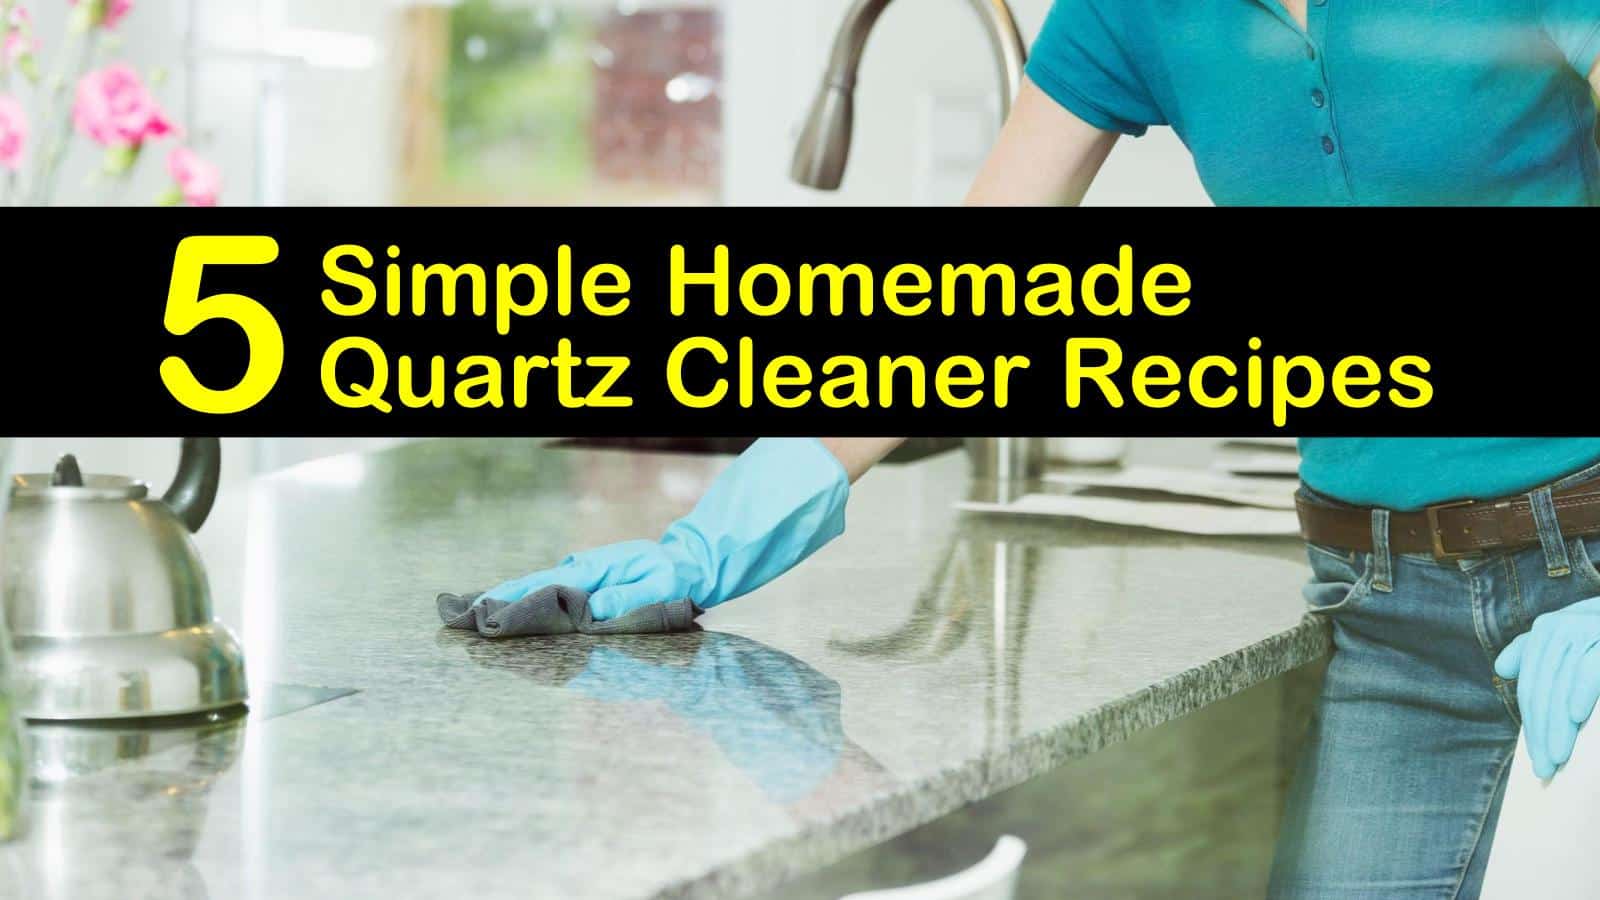 5 Simple Homemade Quartz Cleaner Recipes